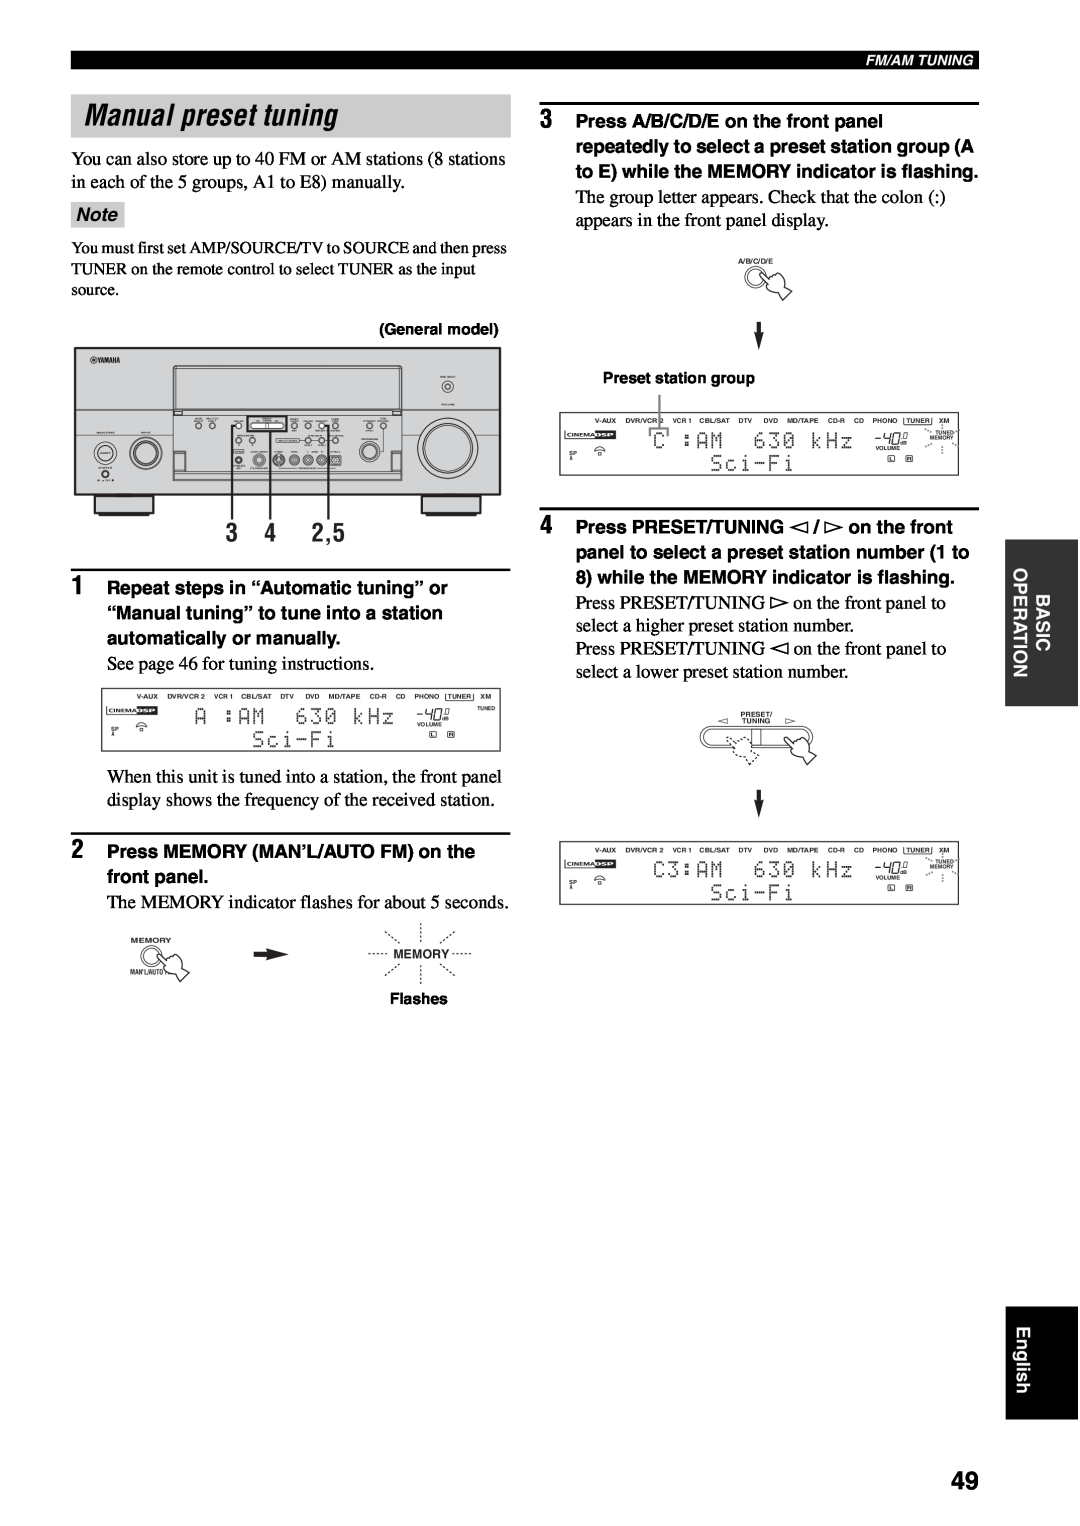 Yamaha RX-V1600 owner manual Manual preset tuning, C3:AM, Sci-Fi 